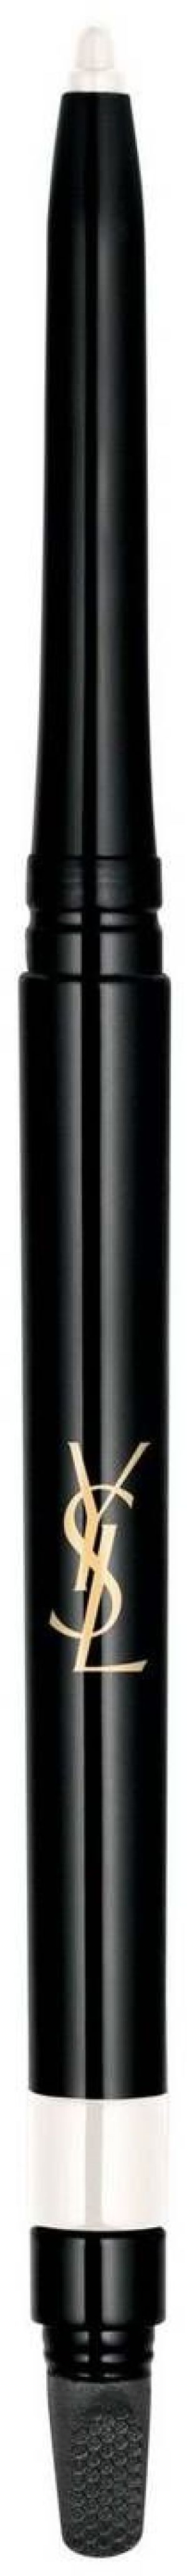 Yves Saint Laurent Dessin des Levres Lip Styler konturówka do ust 23 Universal Lip Definer 0.35g 1